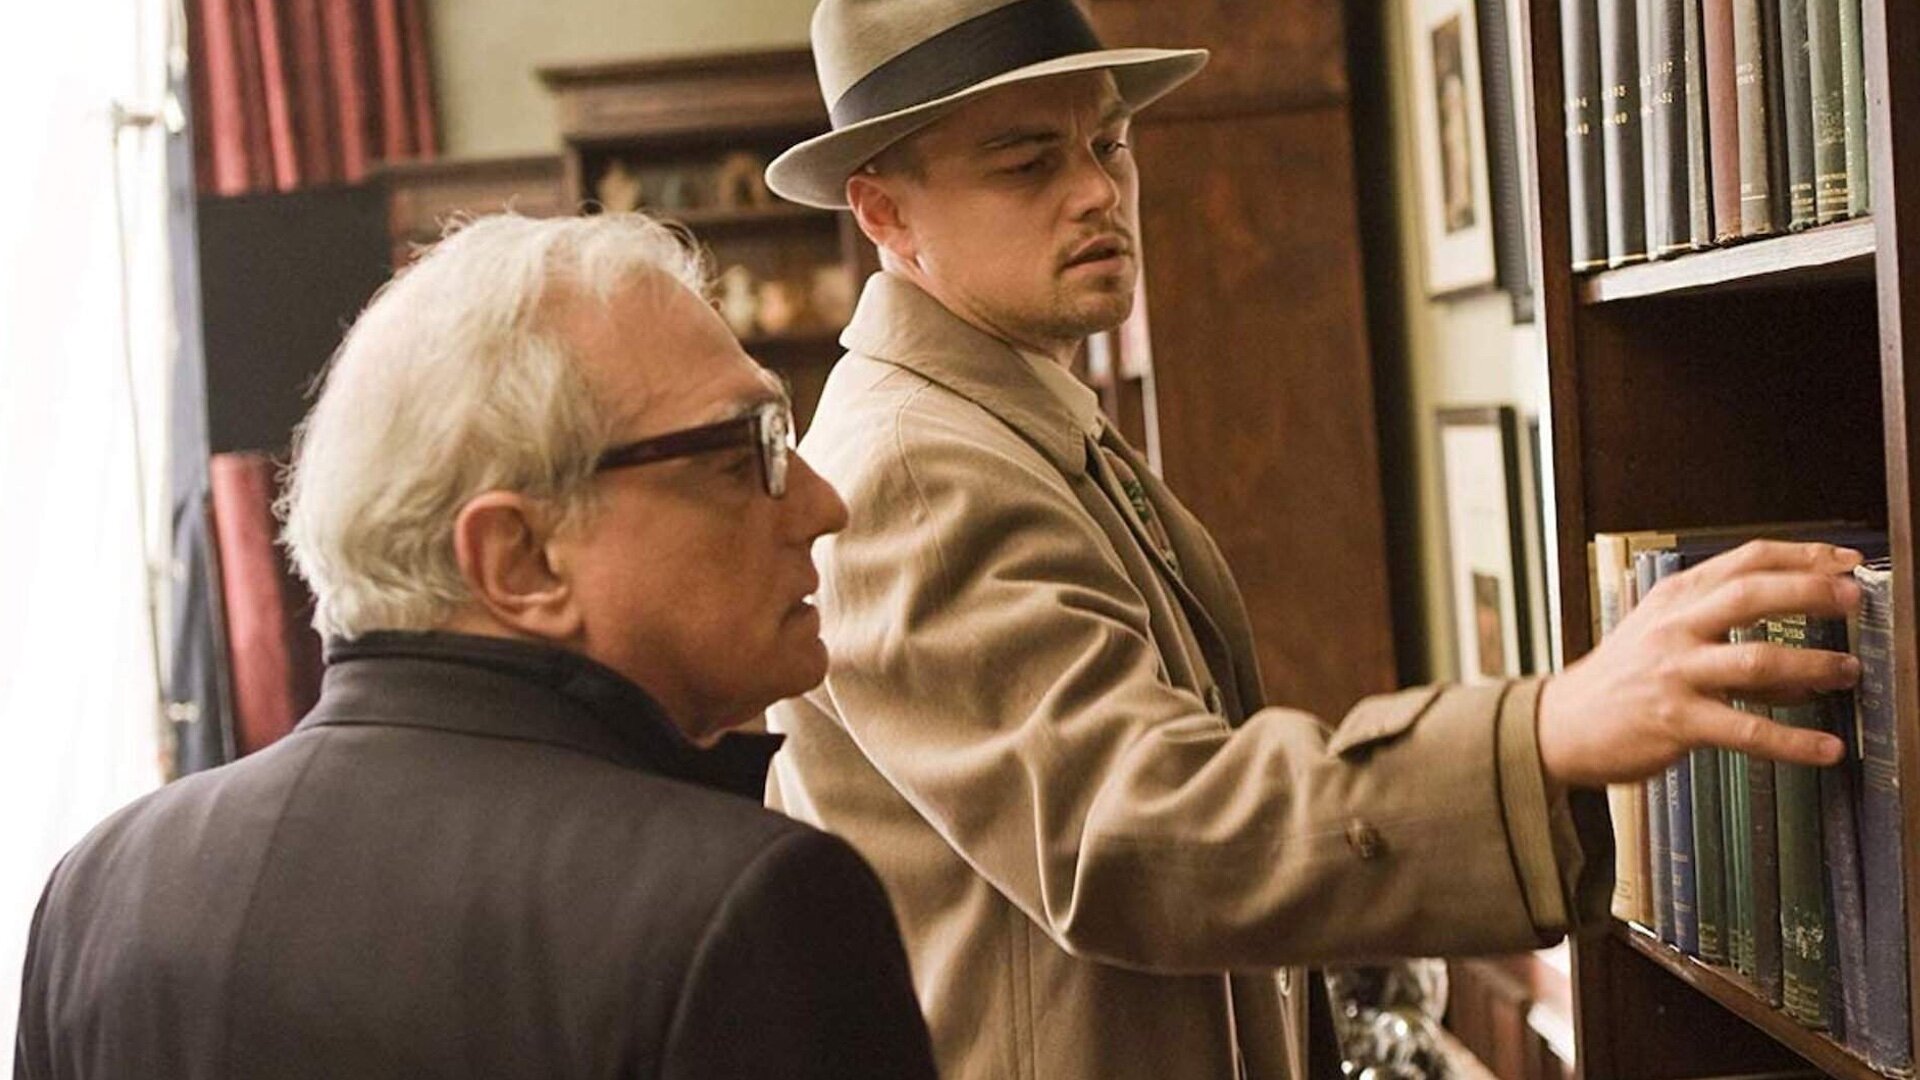 Martin Scorsese and Leonardo DiCaprio